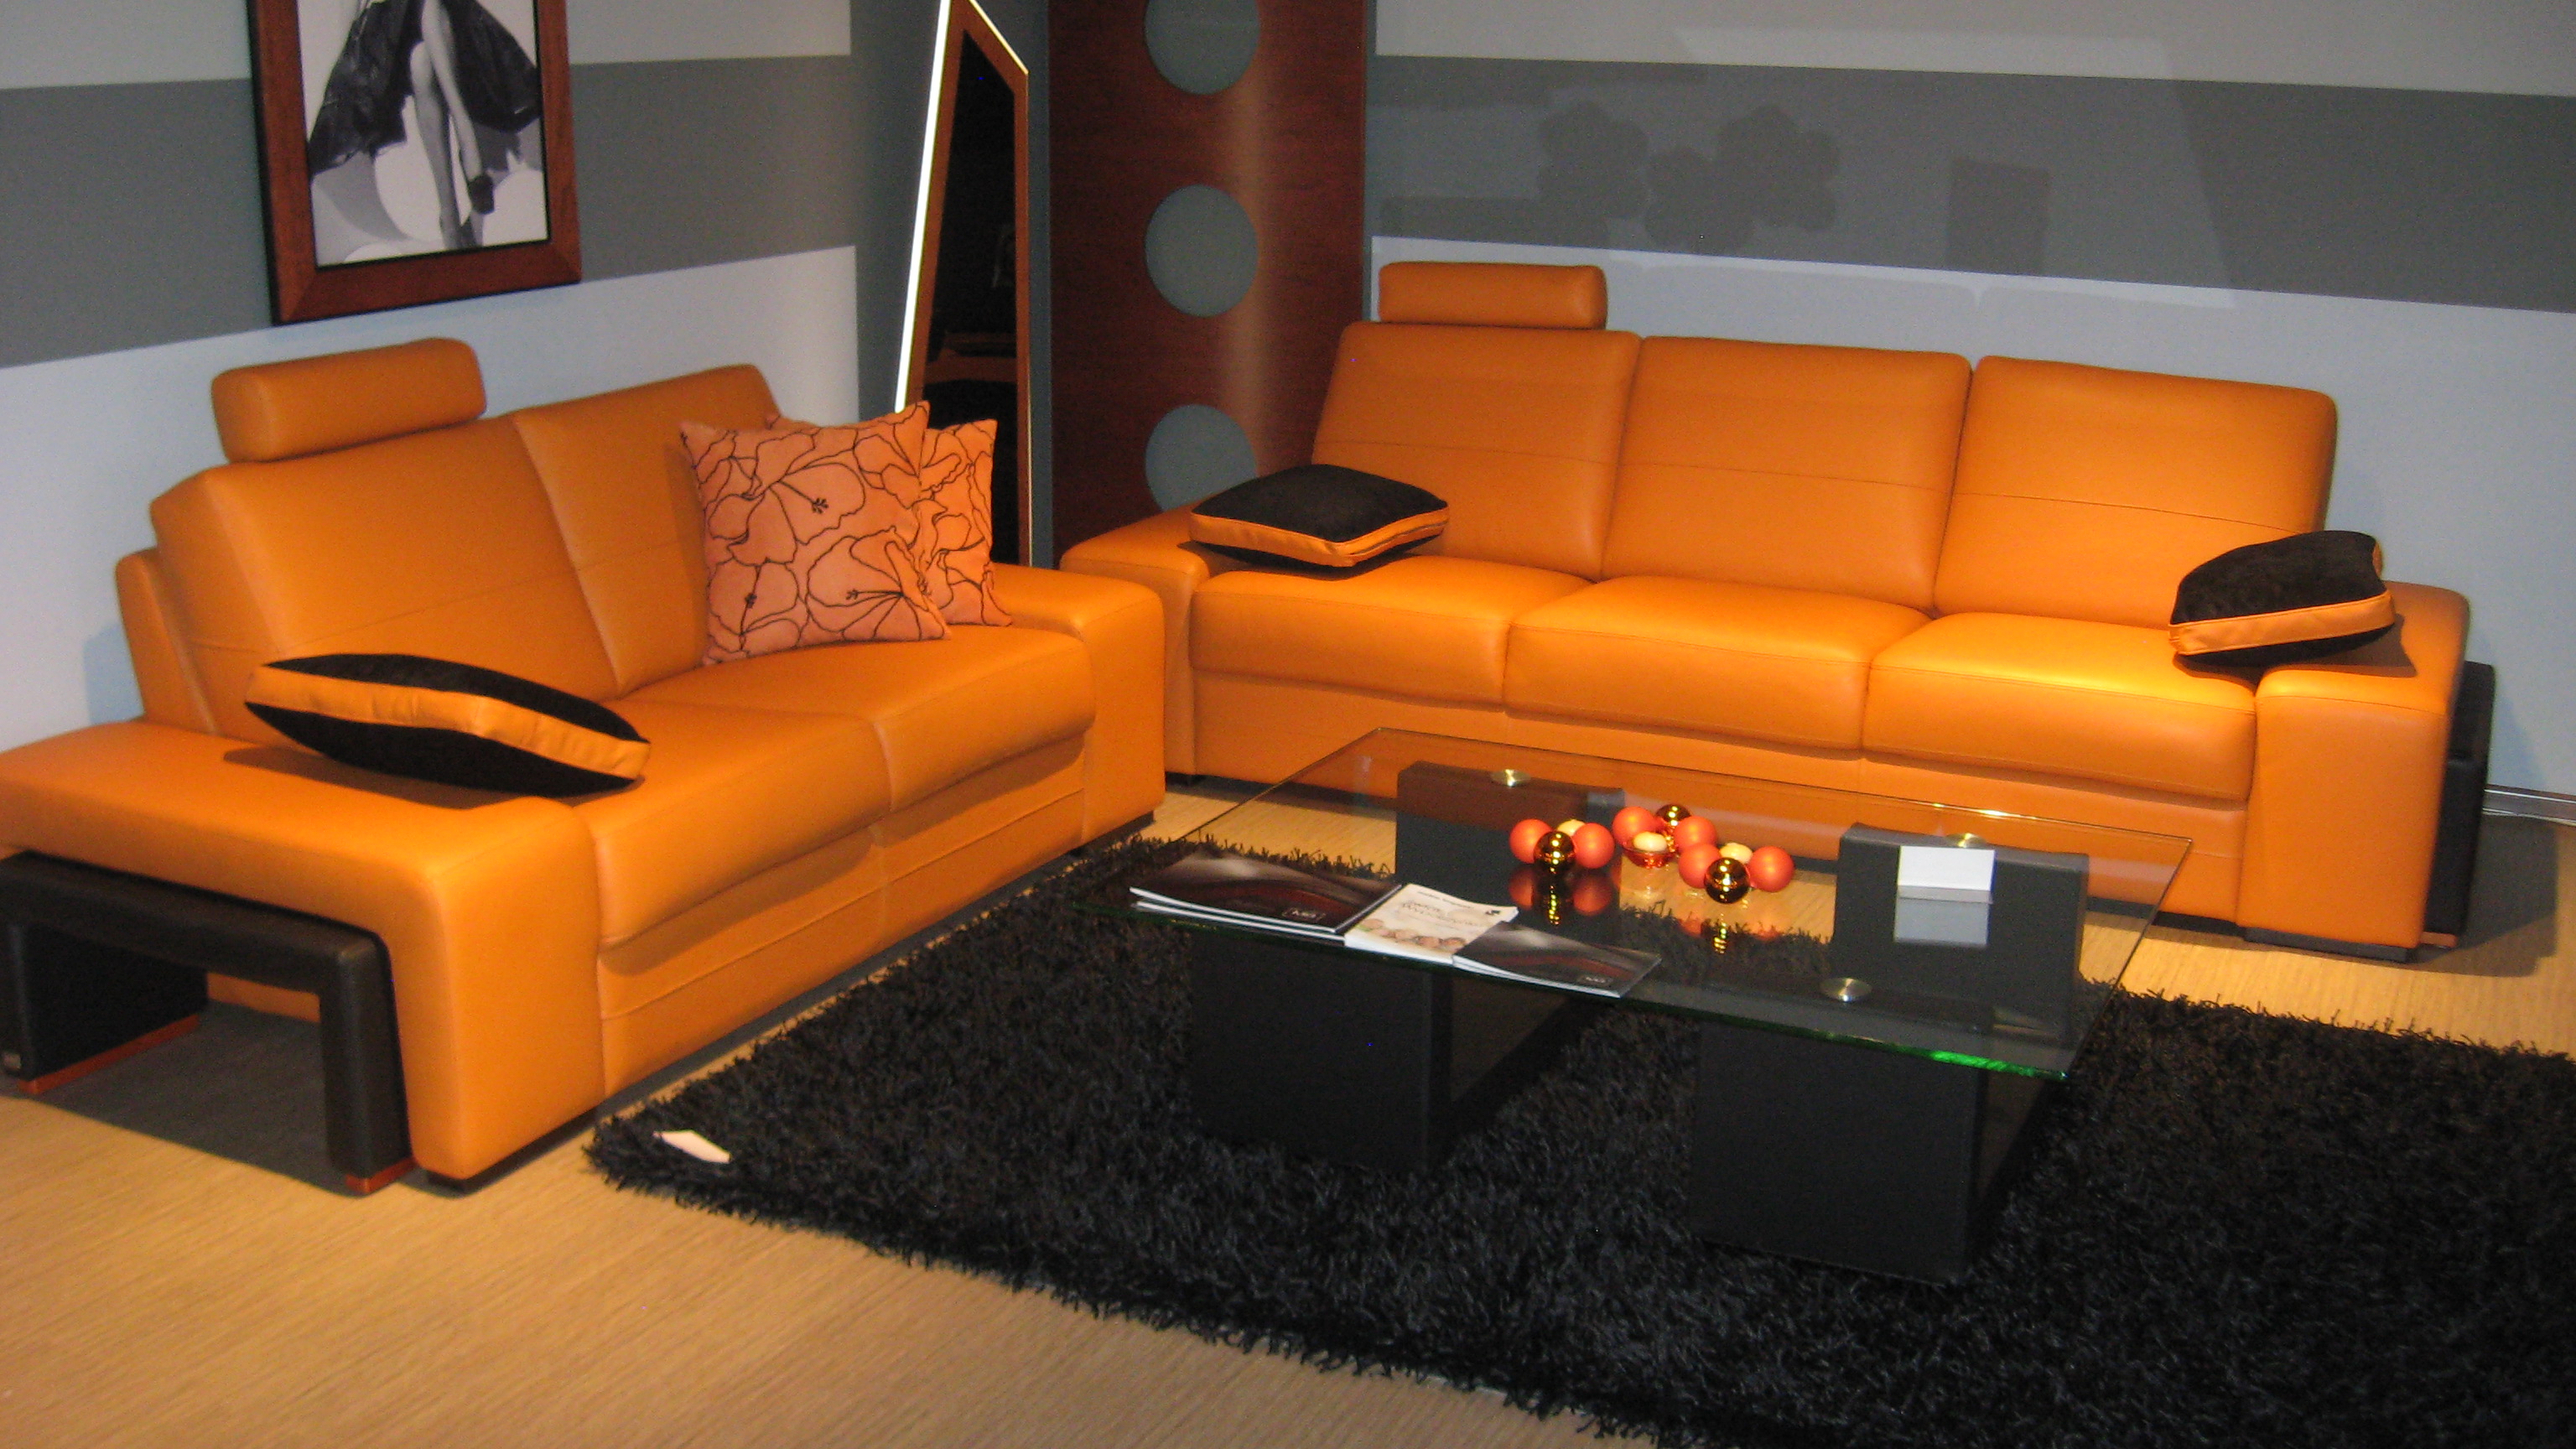 Hiasan ruang tamu yang sangat besar dengan sistem modular